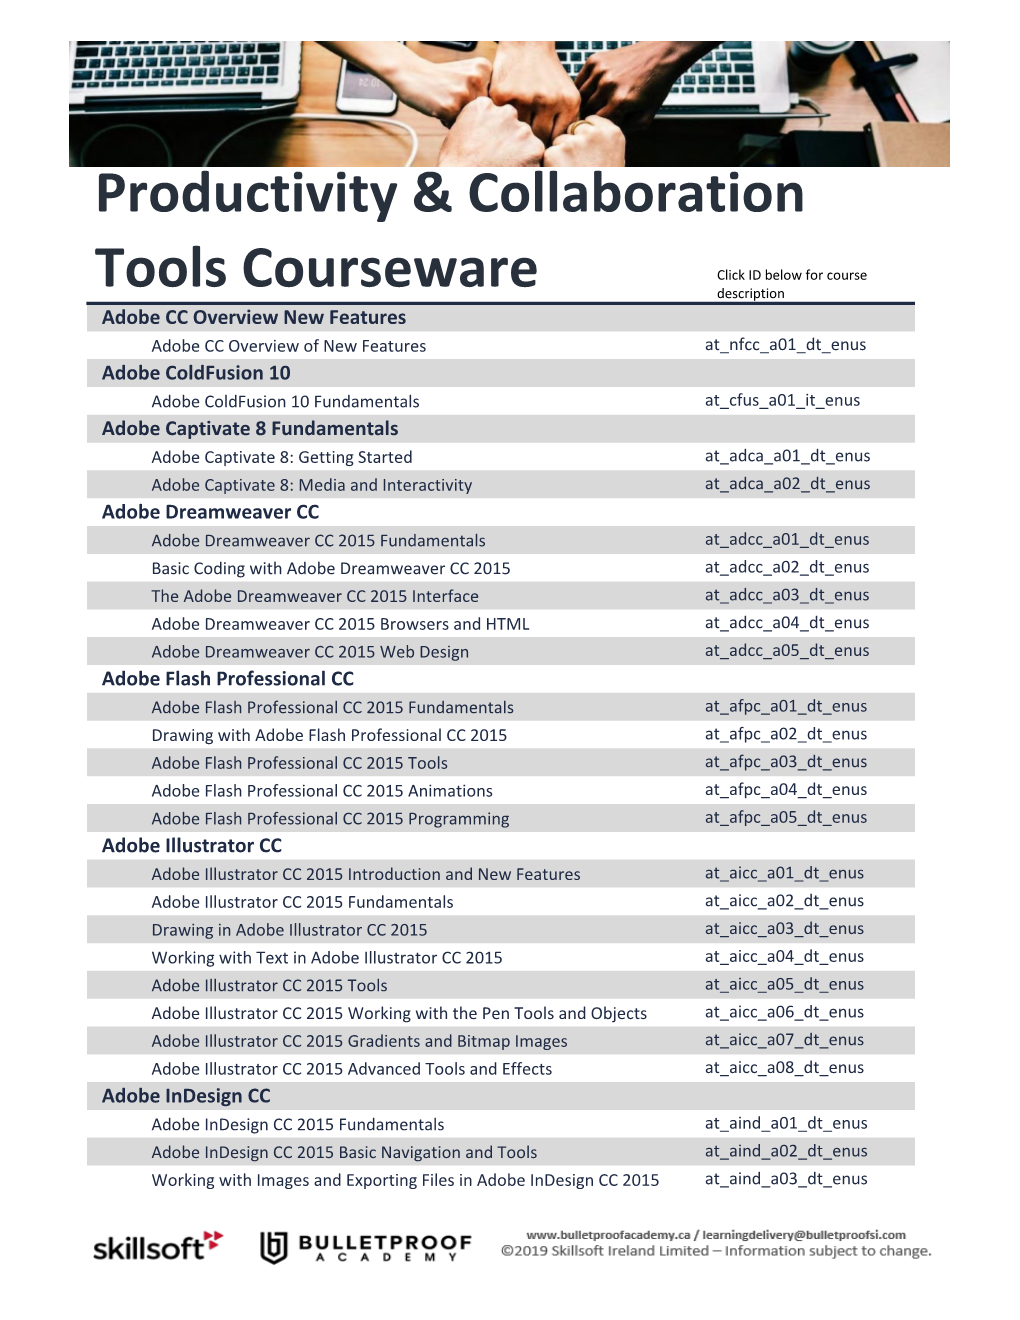 Productivity & Collaboration Tools Courseware